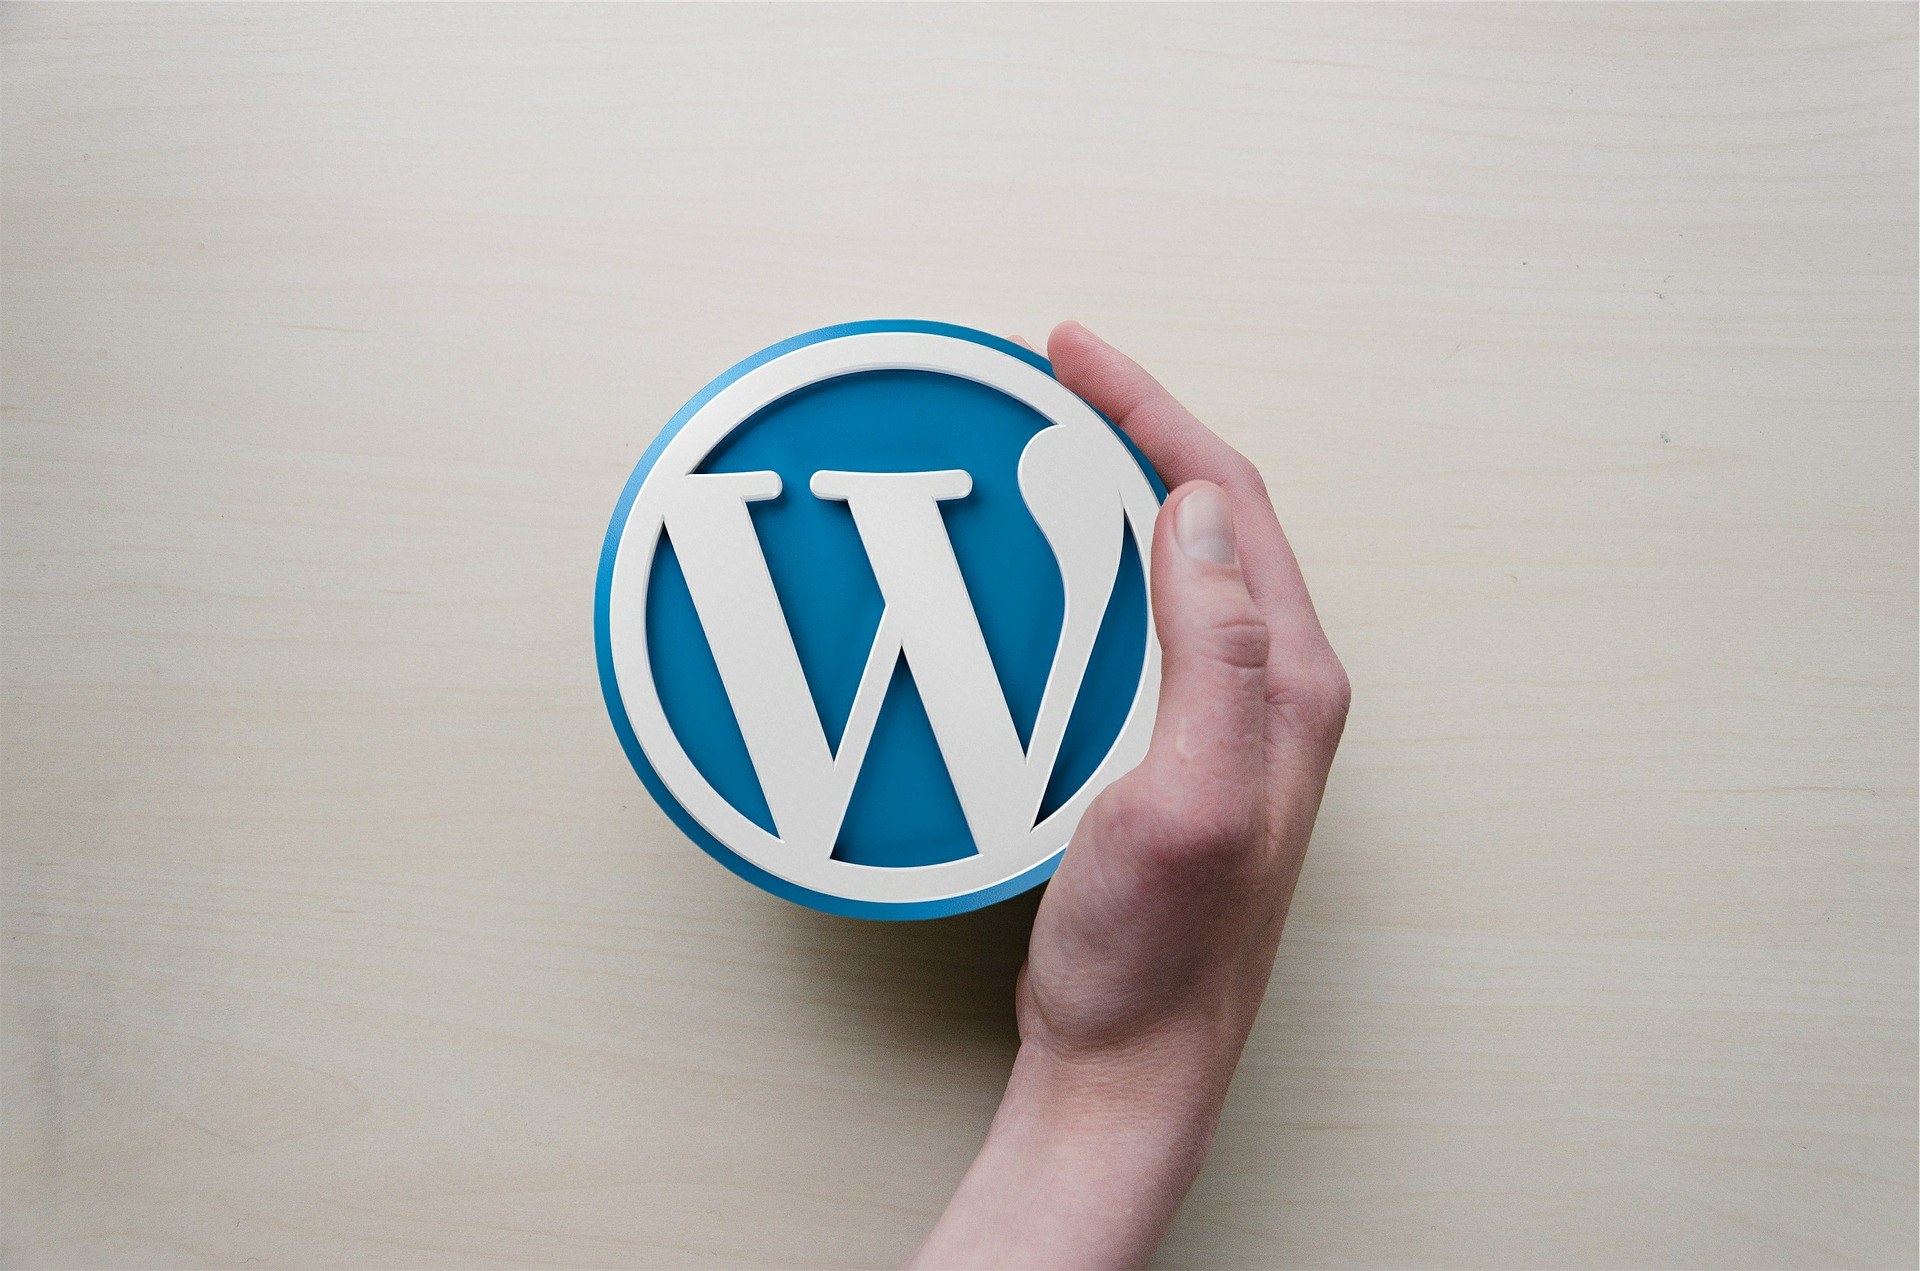 WordPress 'Gutenberg' release causes frustration, backlash among existing users